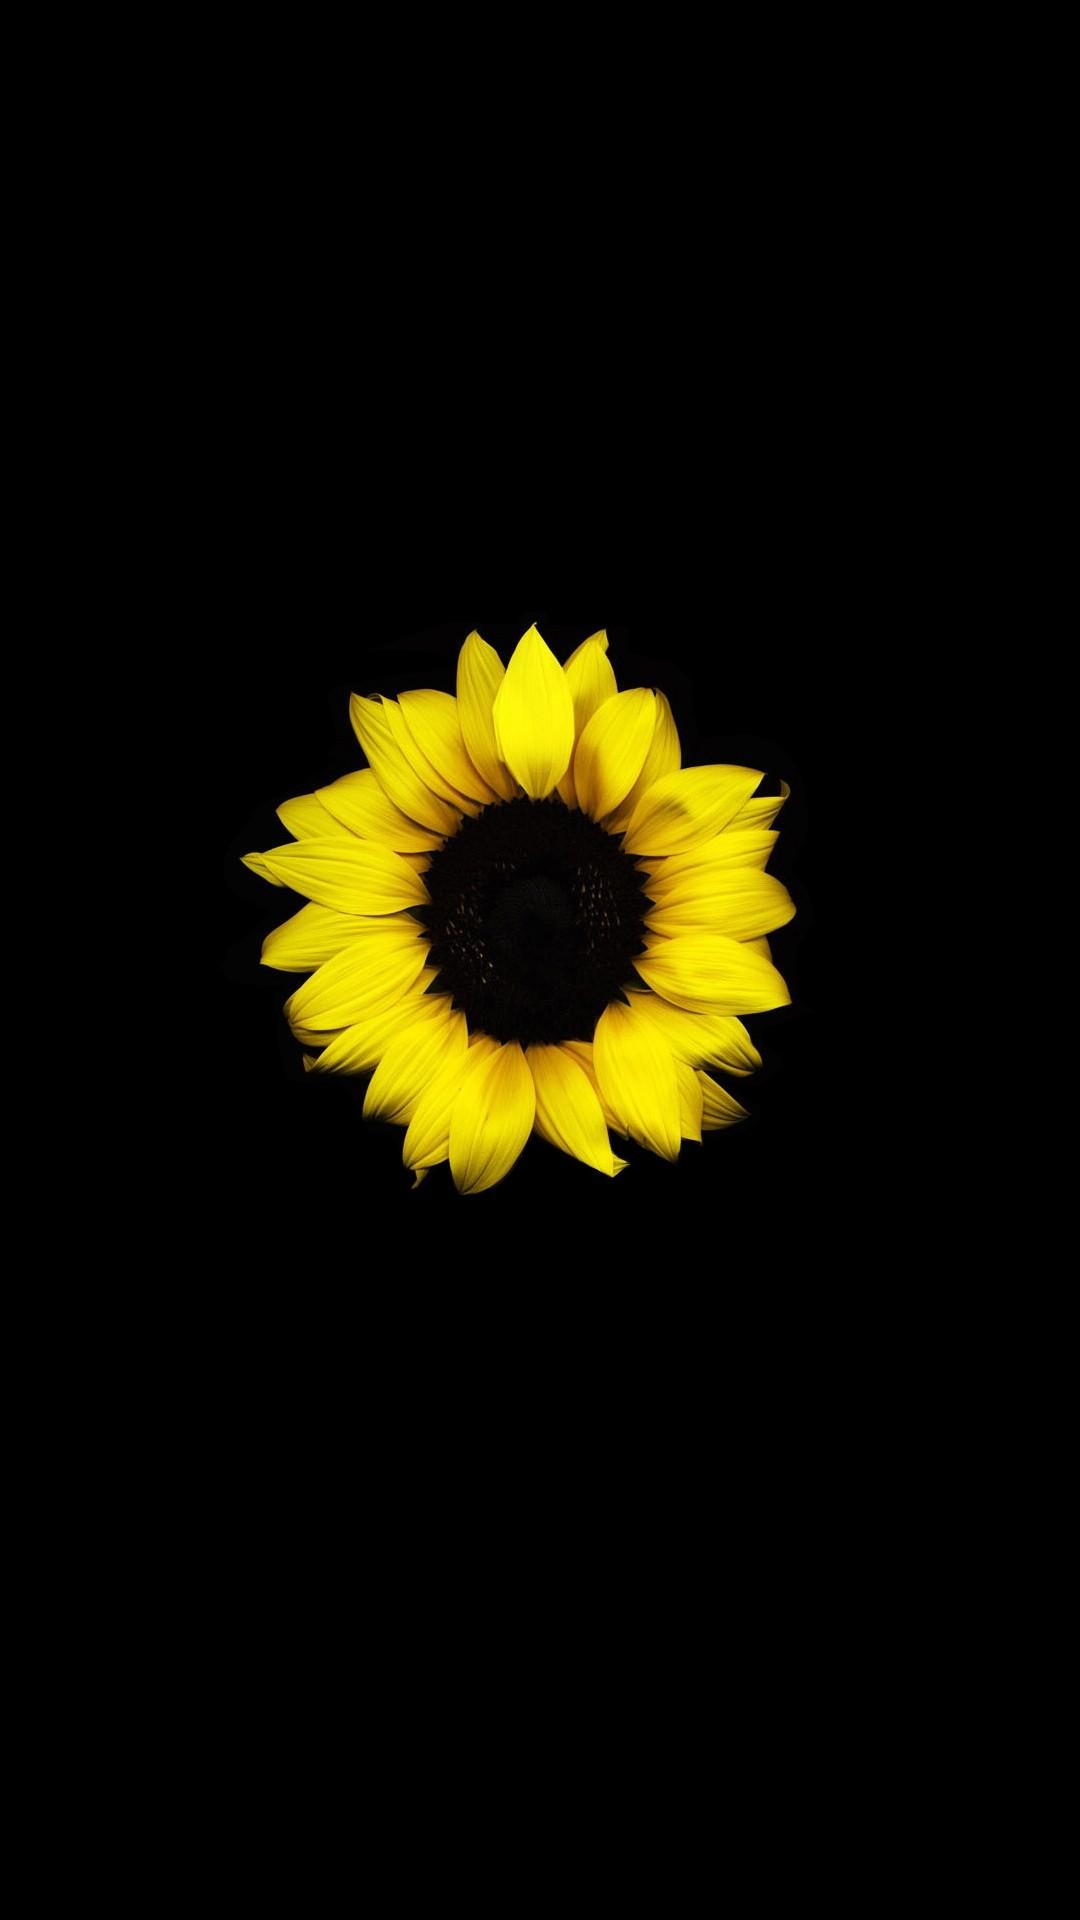 My favorite amoled wallpaper, yellow flower [1080x1920]